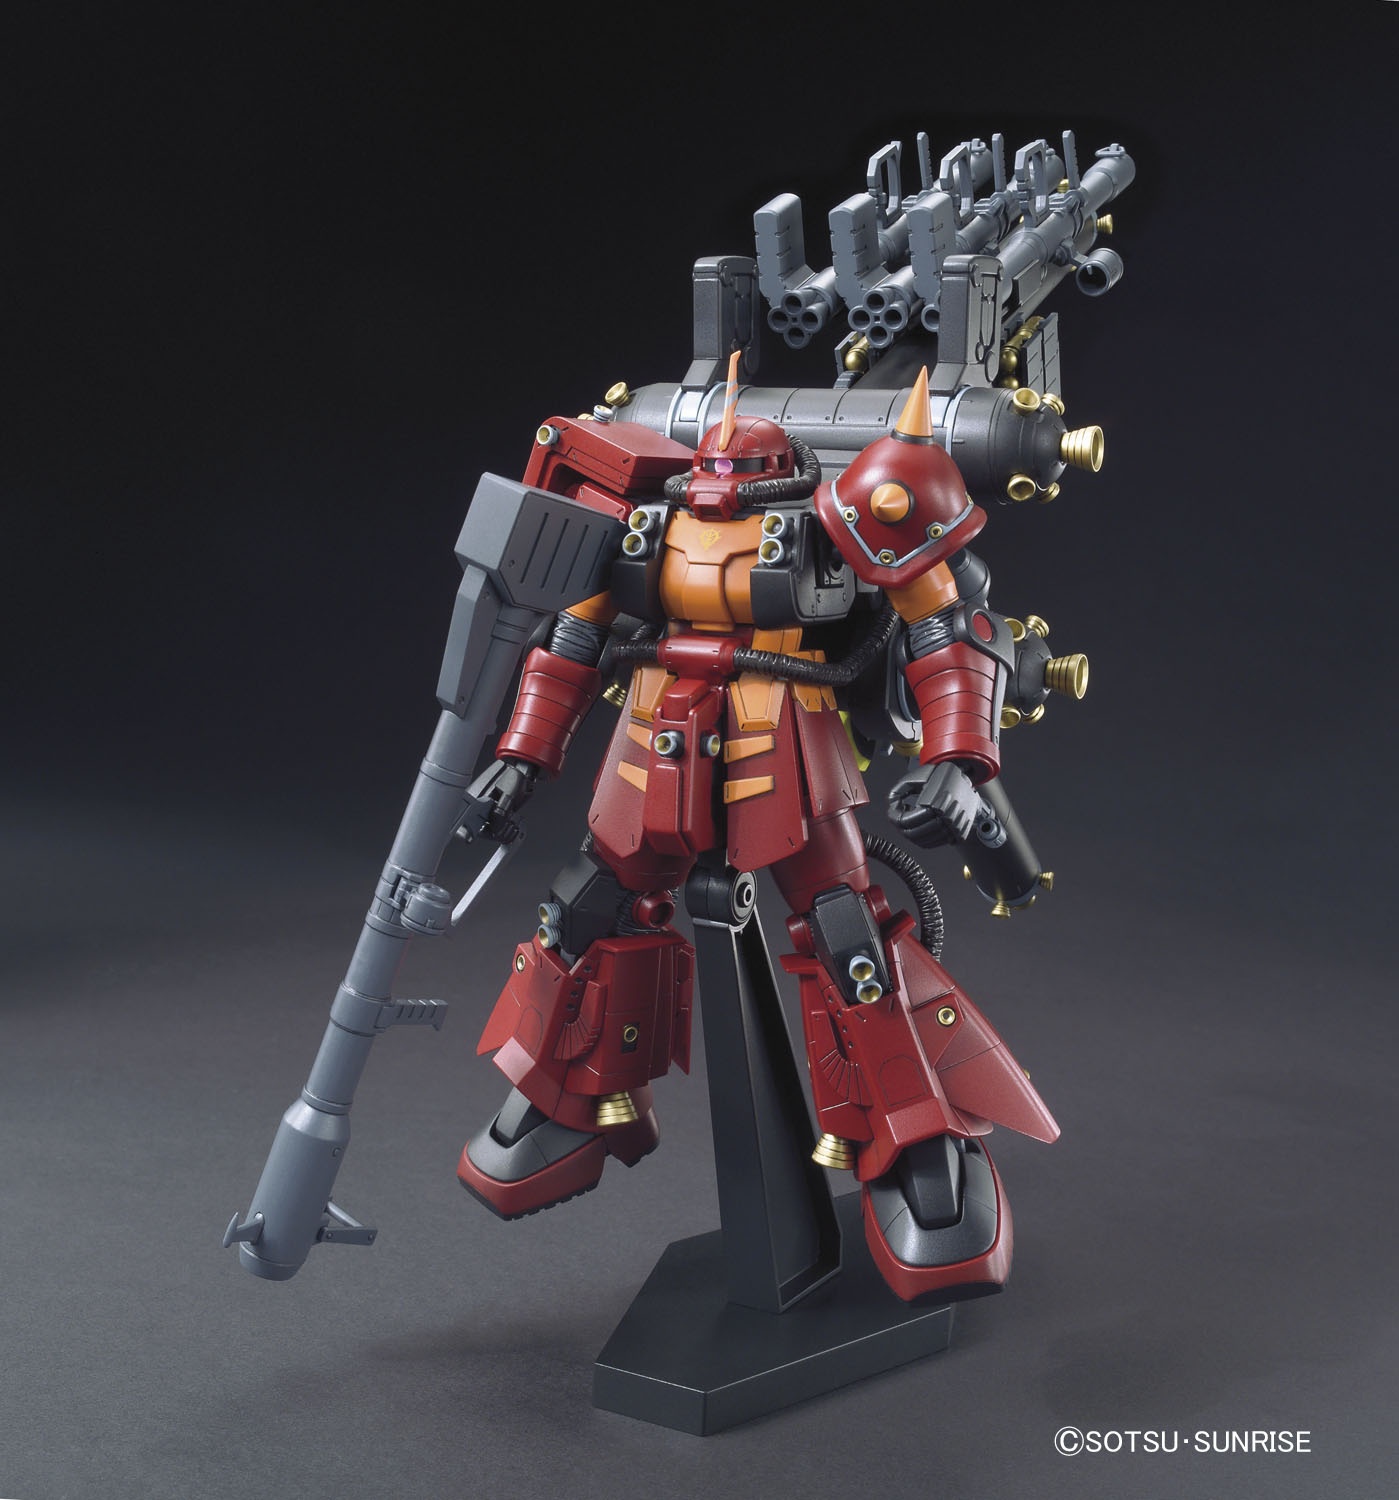 Bandai Plastic Model HG Gundam Zaku 2 High Mobility Type 1/144 Scale for sale online 